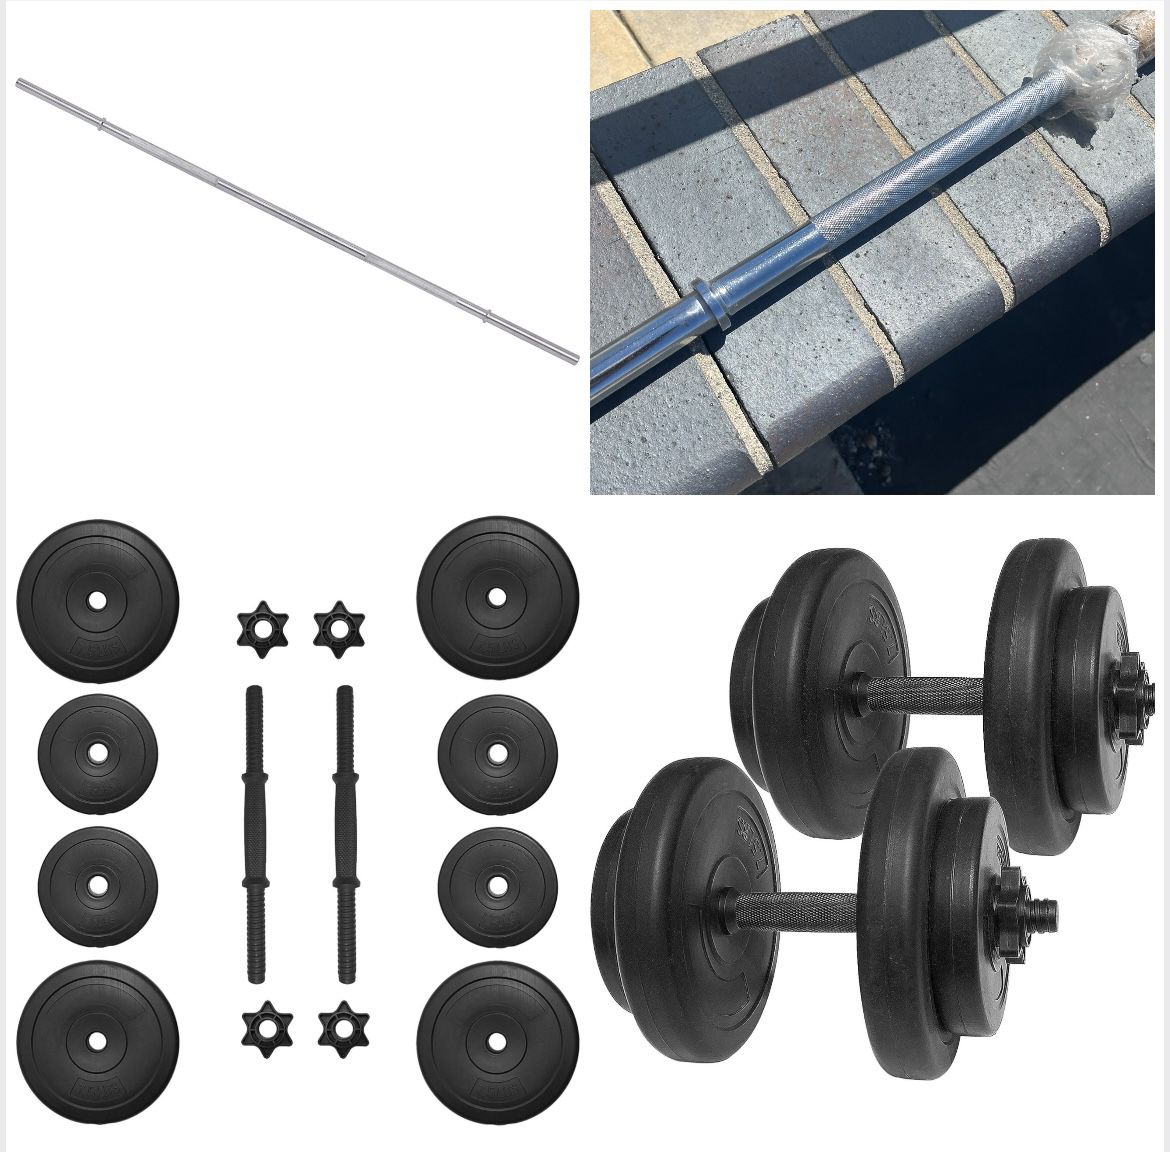 5ft. Standard 300lb capacity Barbell /2-20lb Adjustable Dumbbells With Spin Locks